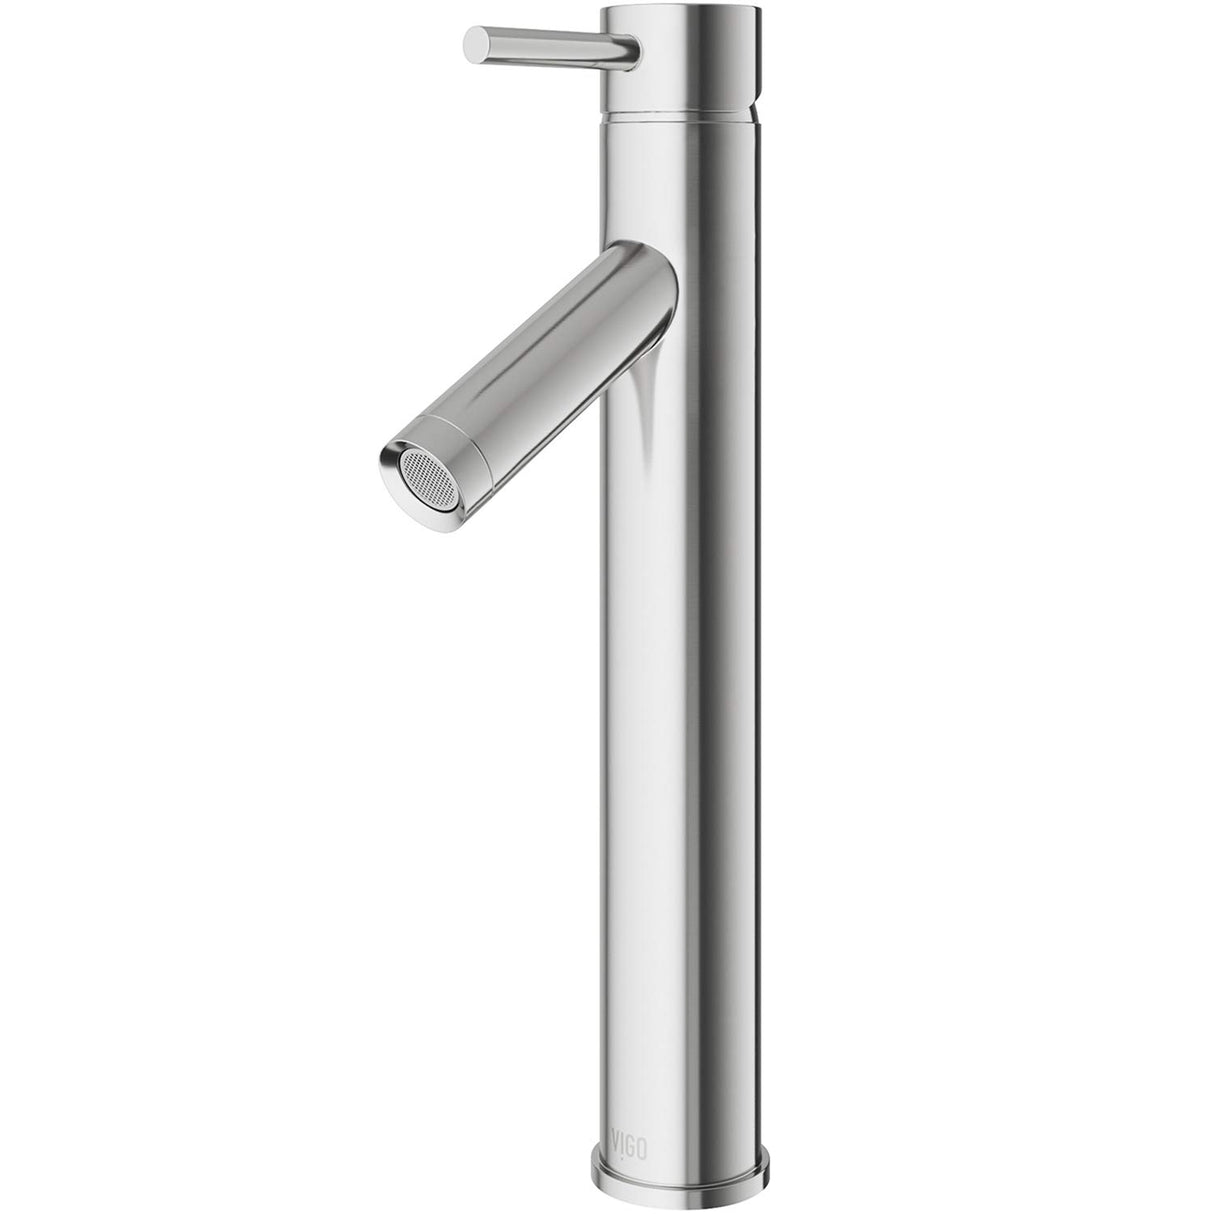 VIGO Grant 12.75 inch H Single Hole Single Handle Bathroom Faucet in Brushed Nickel - Vessel Sink Faucet VG03003BN